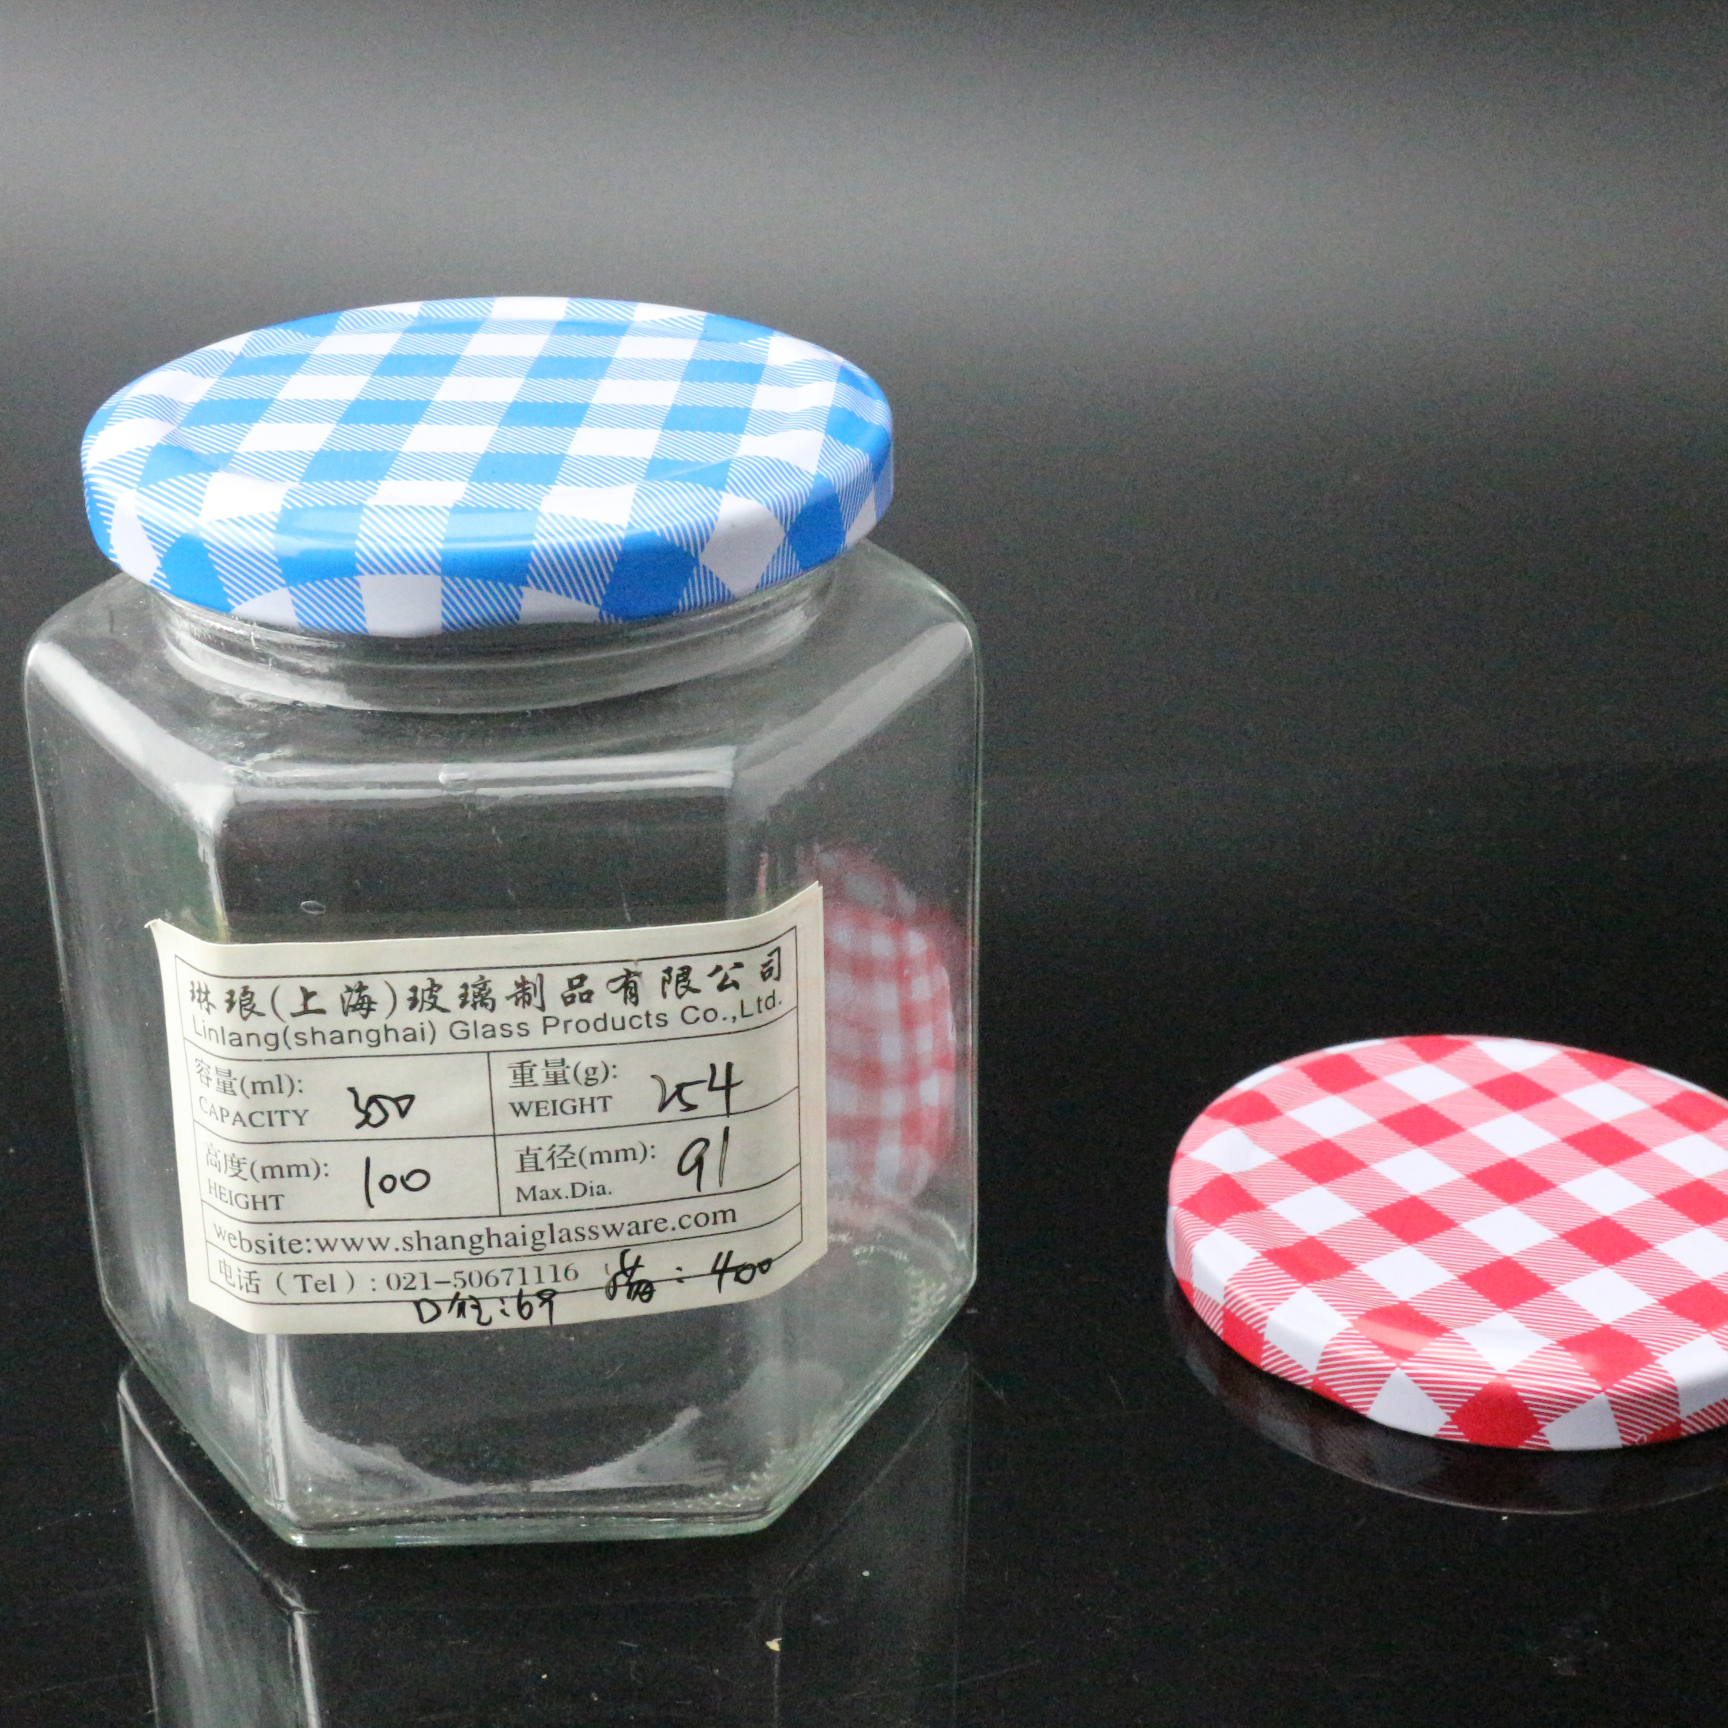 Preserve chutney alimentos mel de vidro frascos de vidro hexagonal 190ml